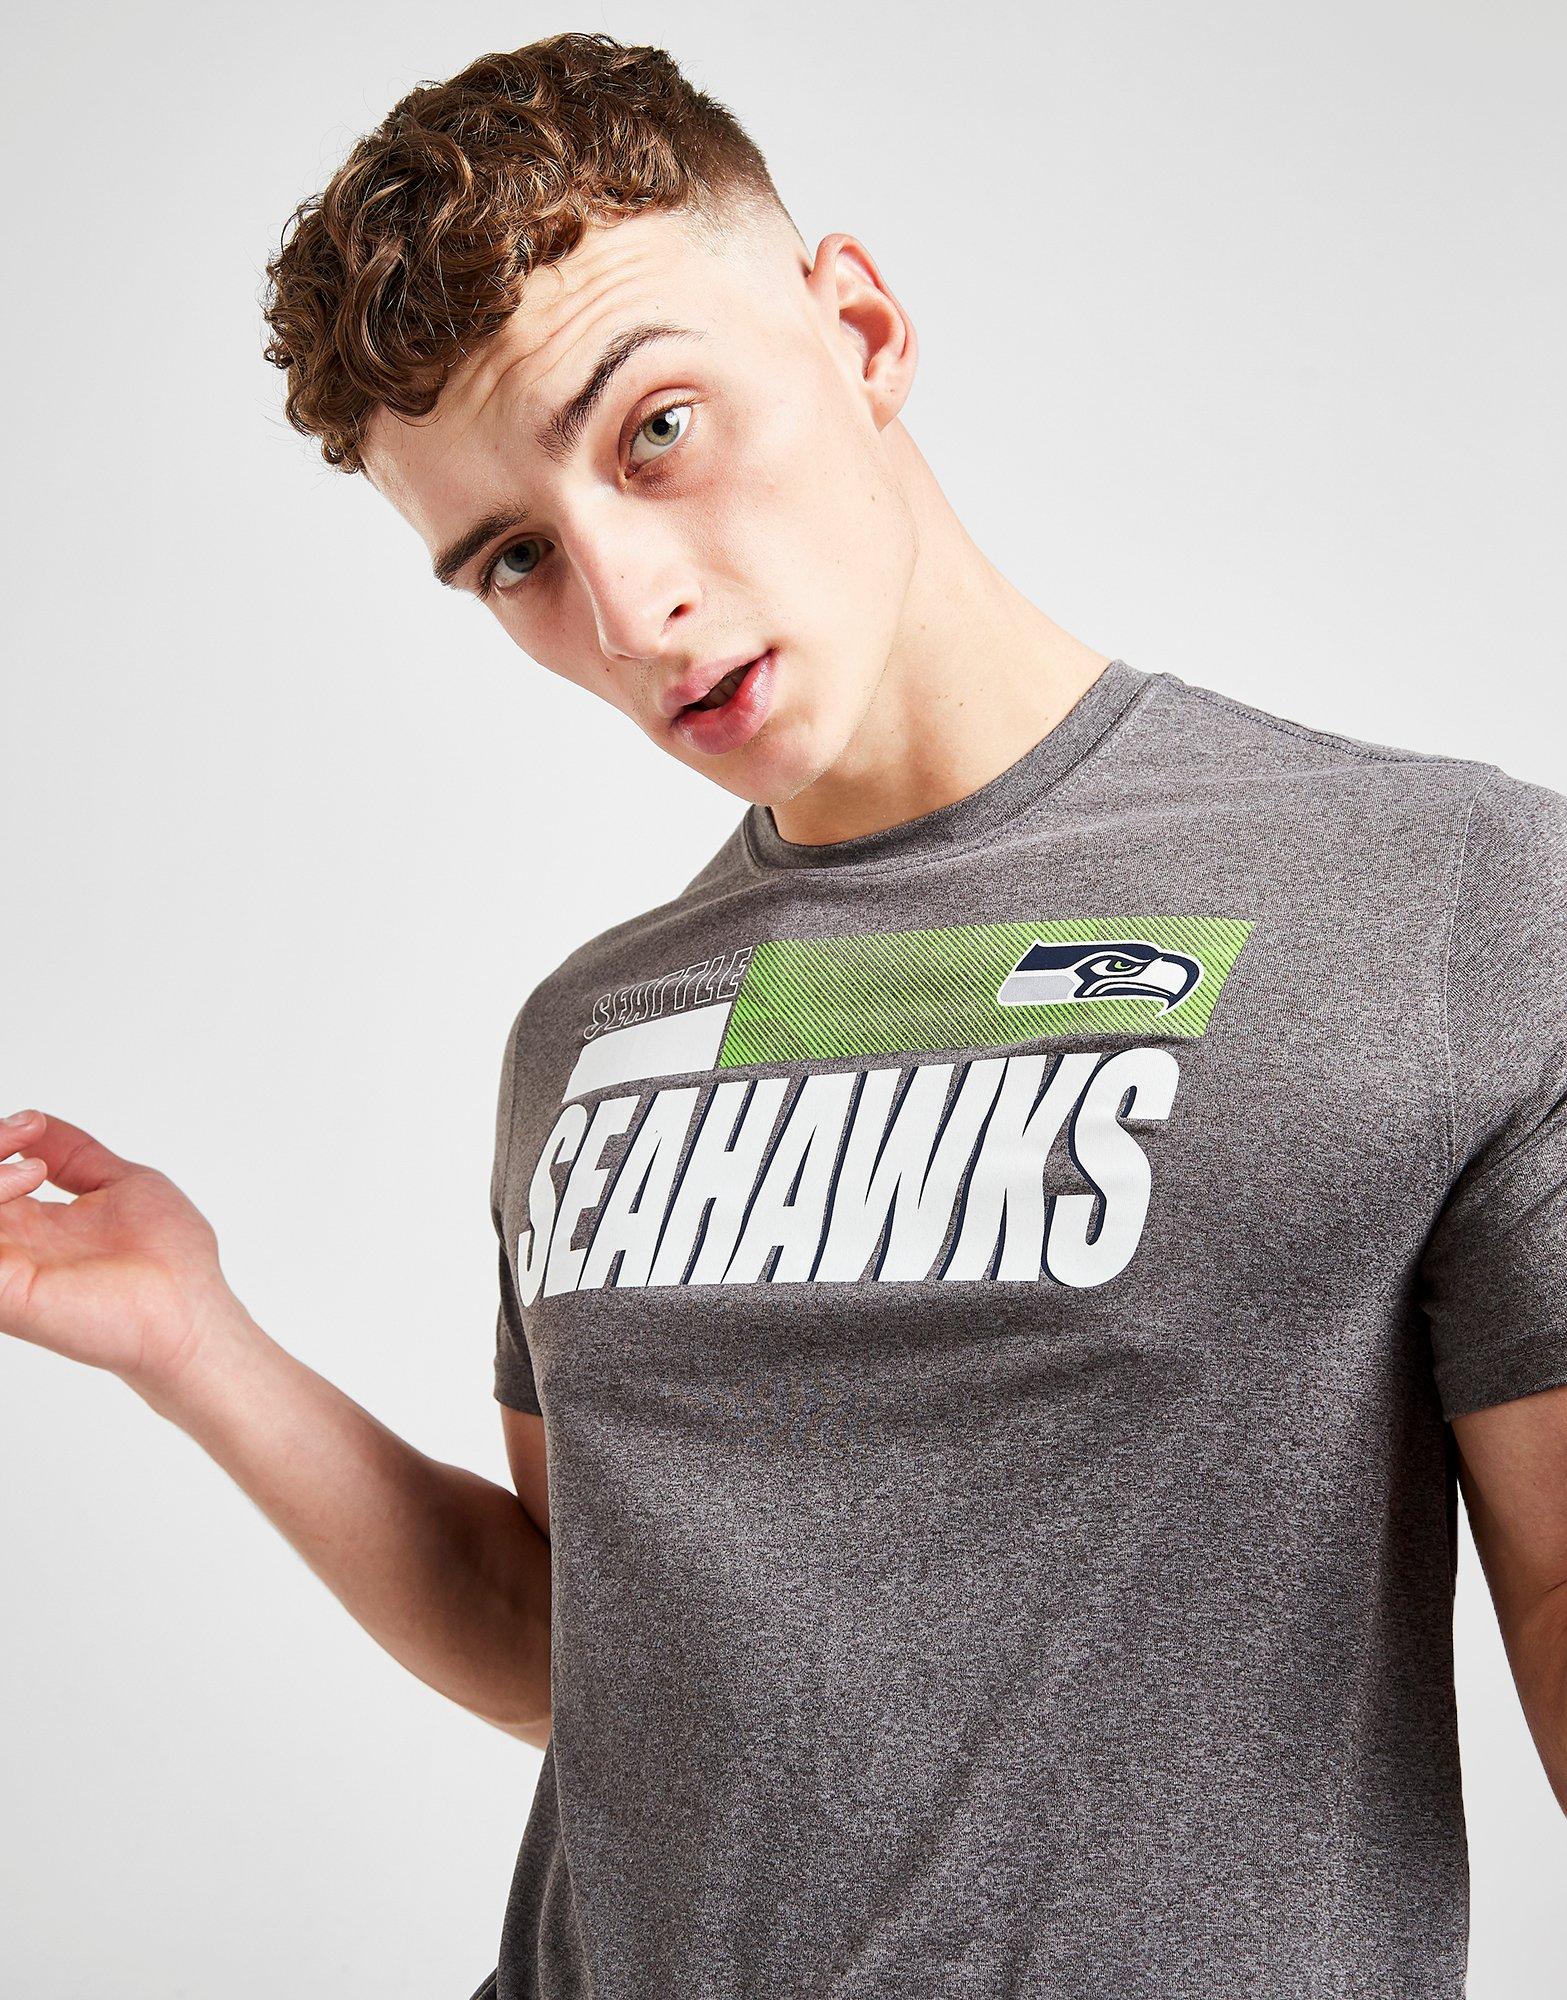 nfl seahawks shirt